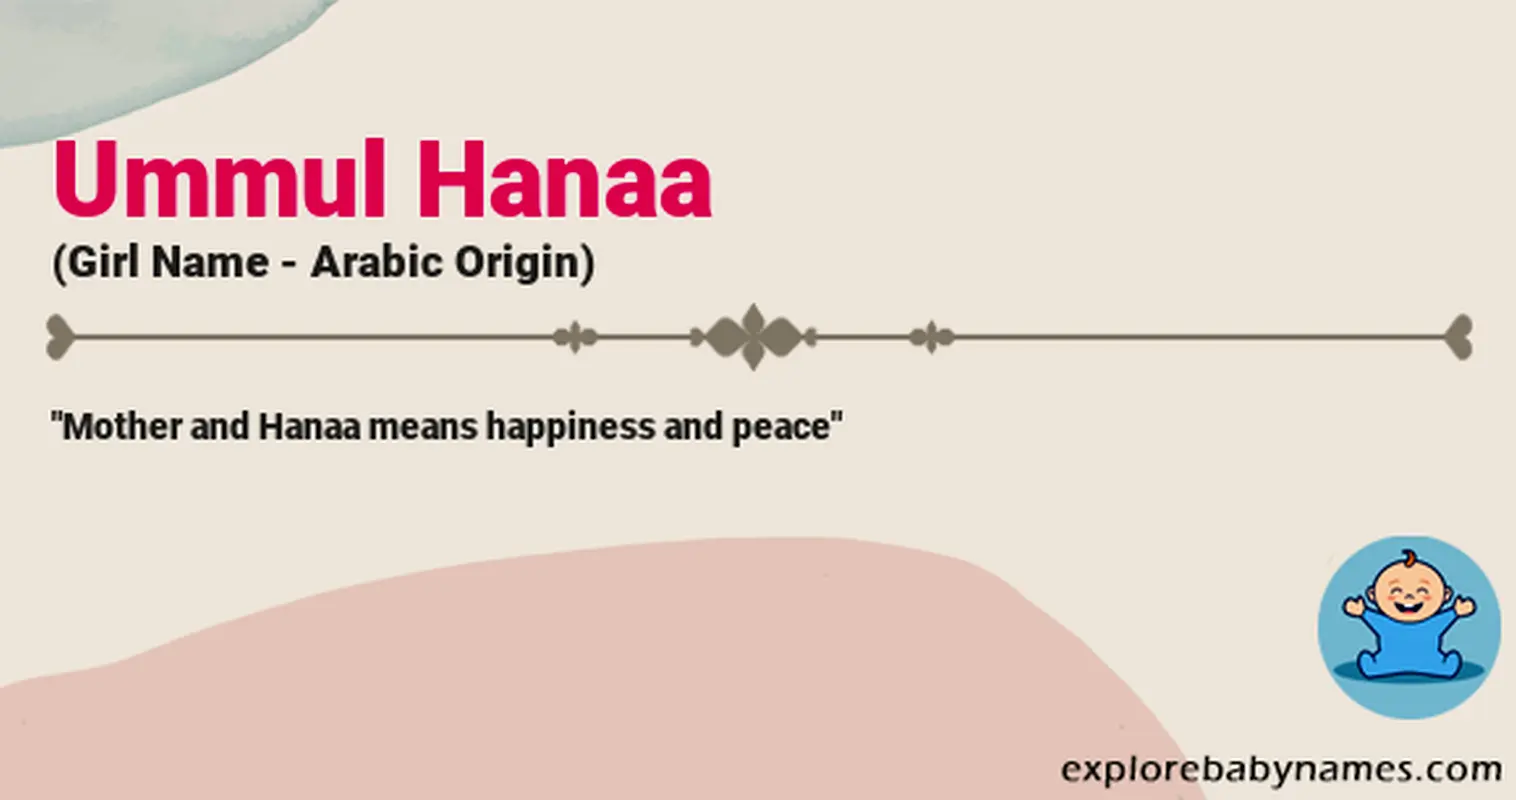 Meaning of Ummul Hanaa